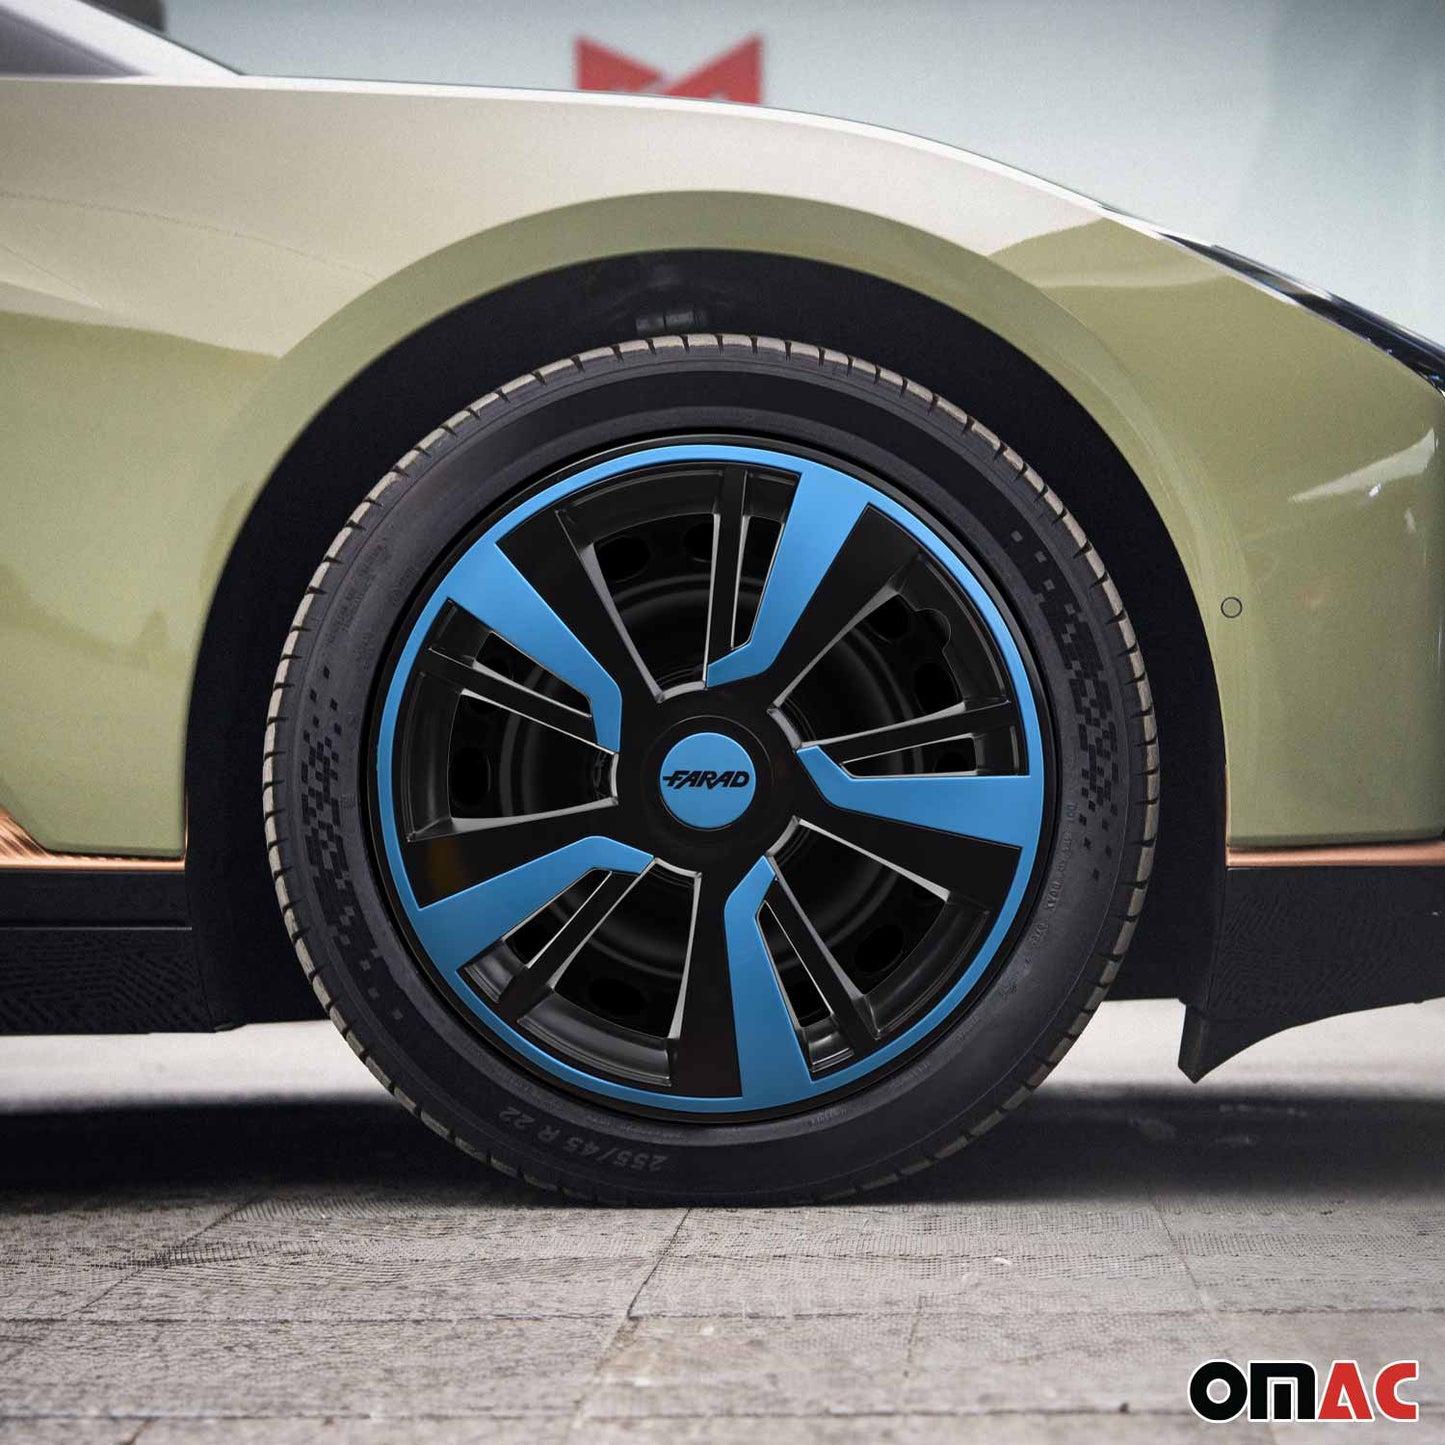 OMAC 16" Hubcaps Wheel Rim Cover Black with Blue Insert 4pcs Set VRT99FR243B16B